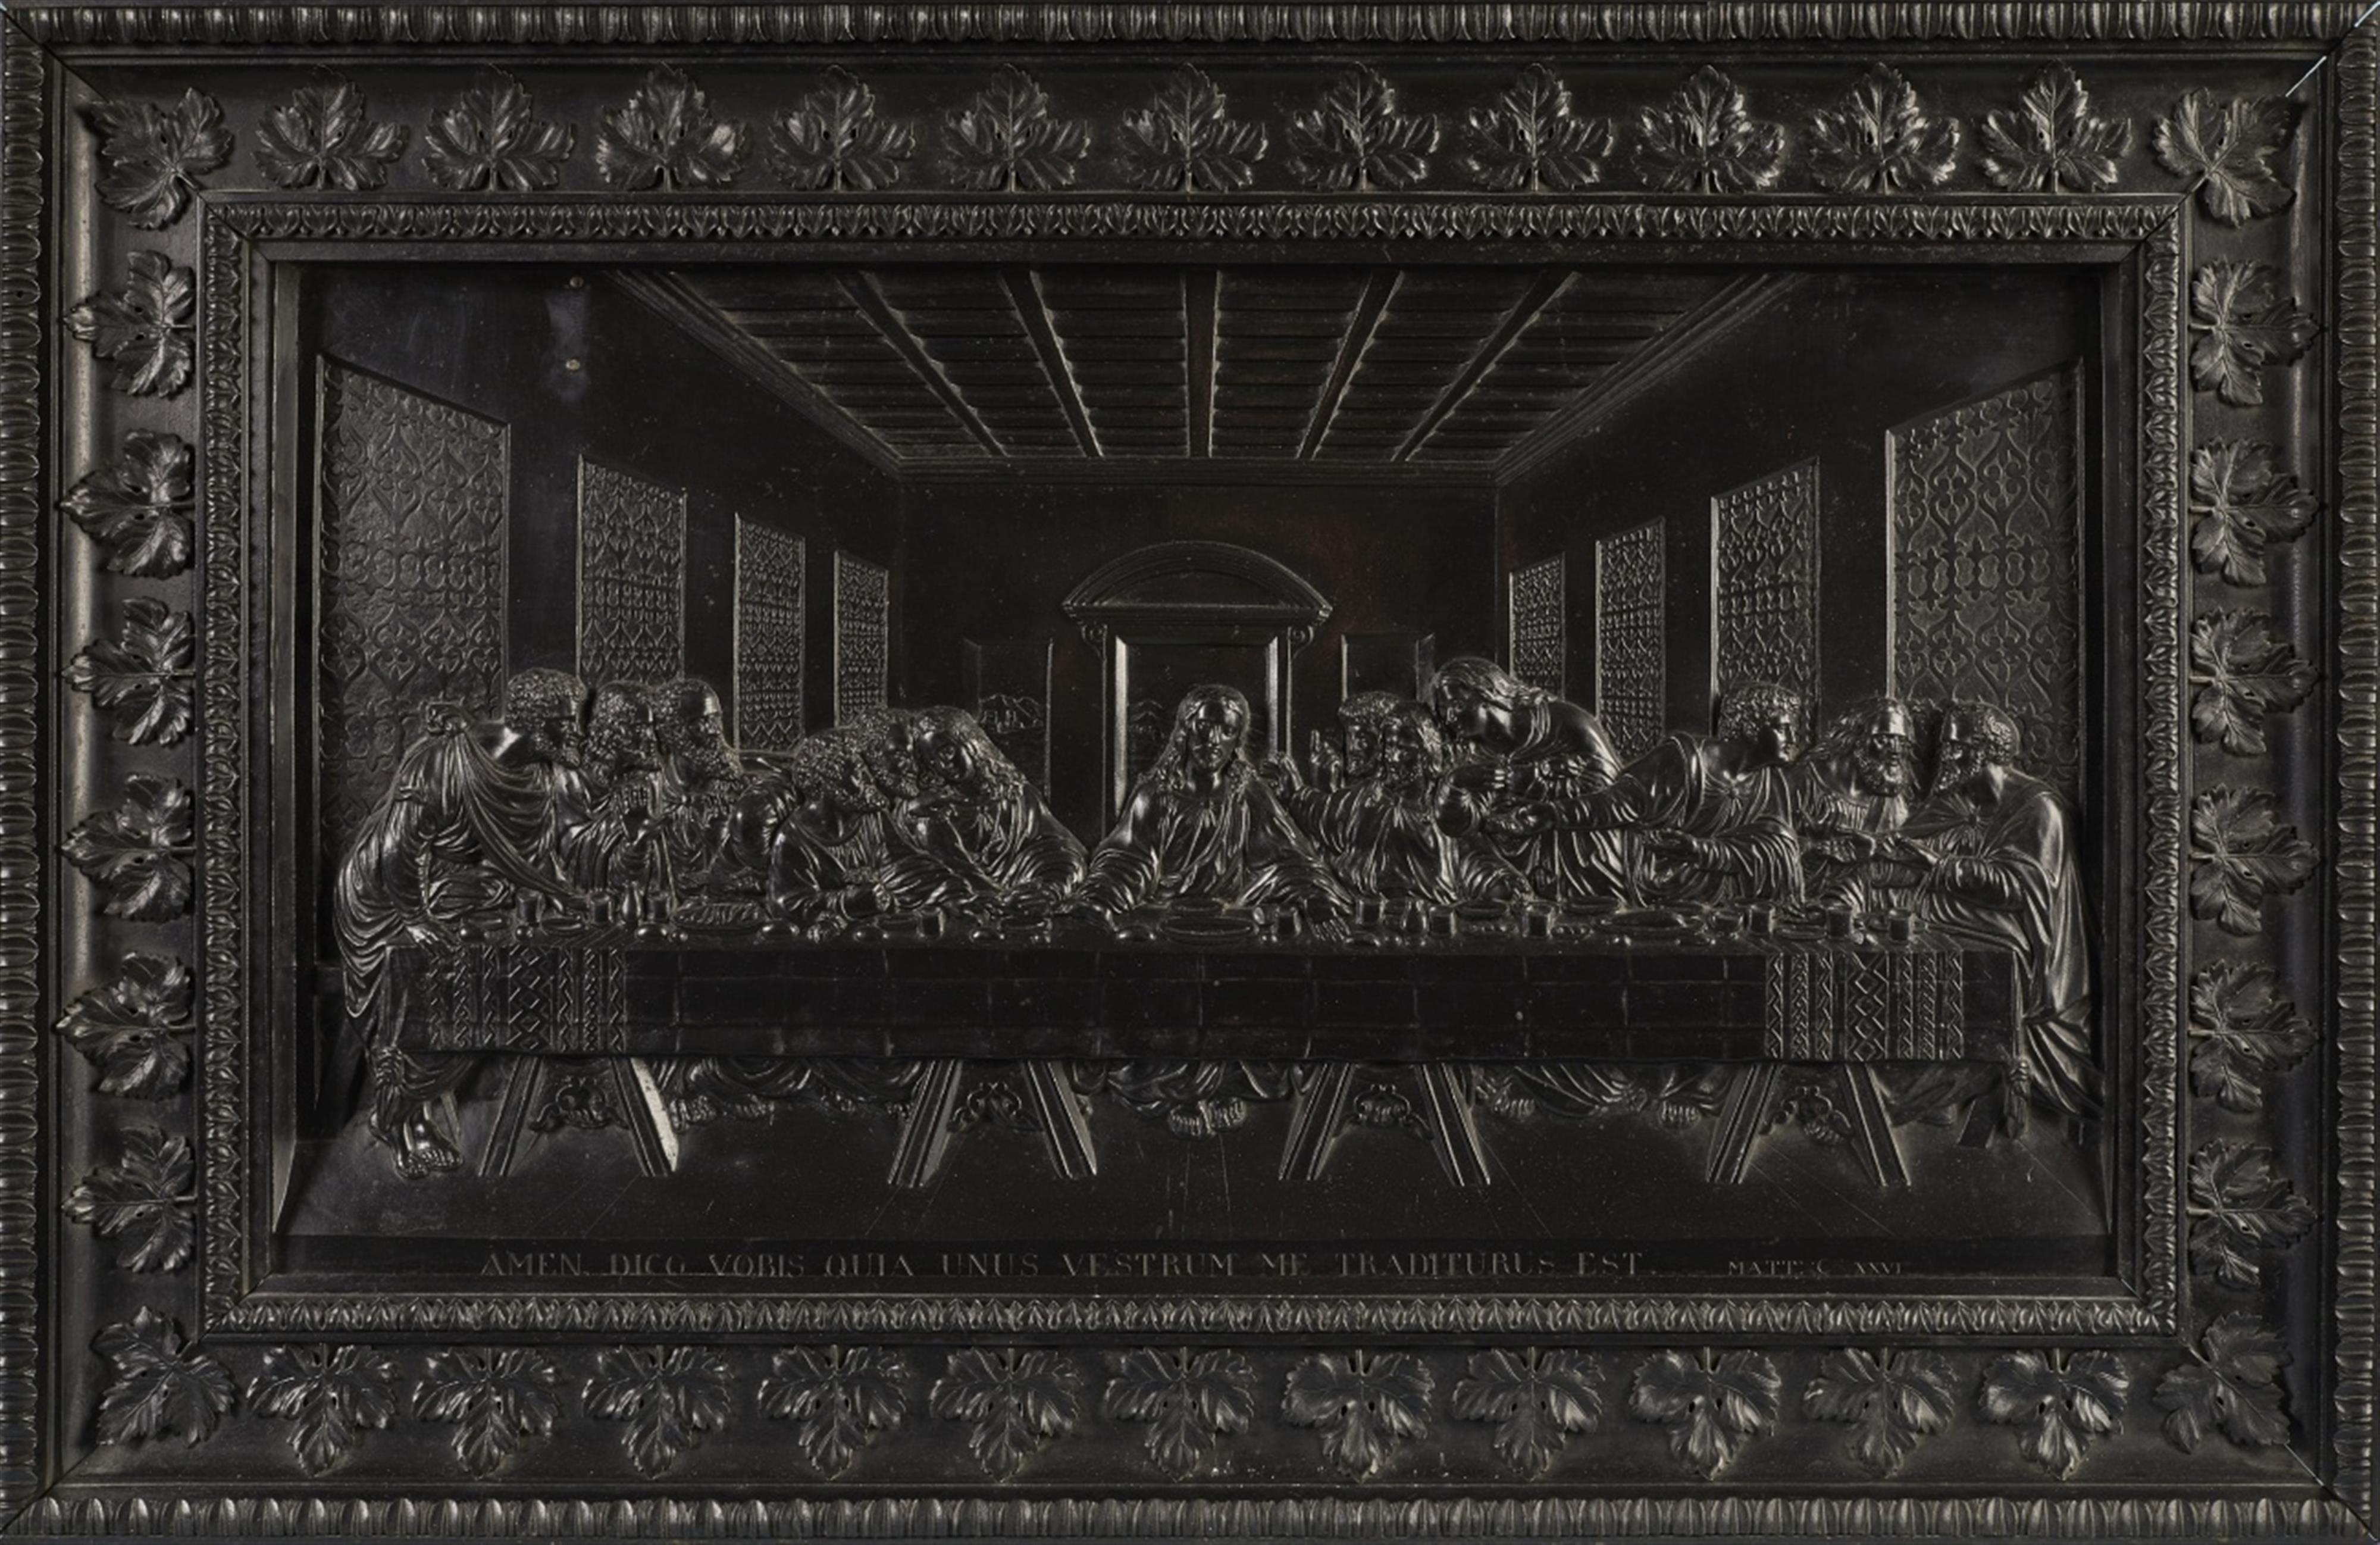 A large cast iron relief plaque with the Last Supper after Leonardo da Vinci - image-1